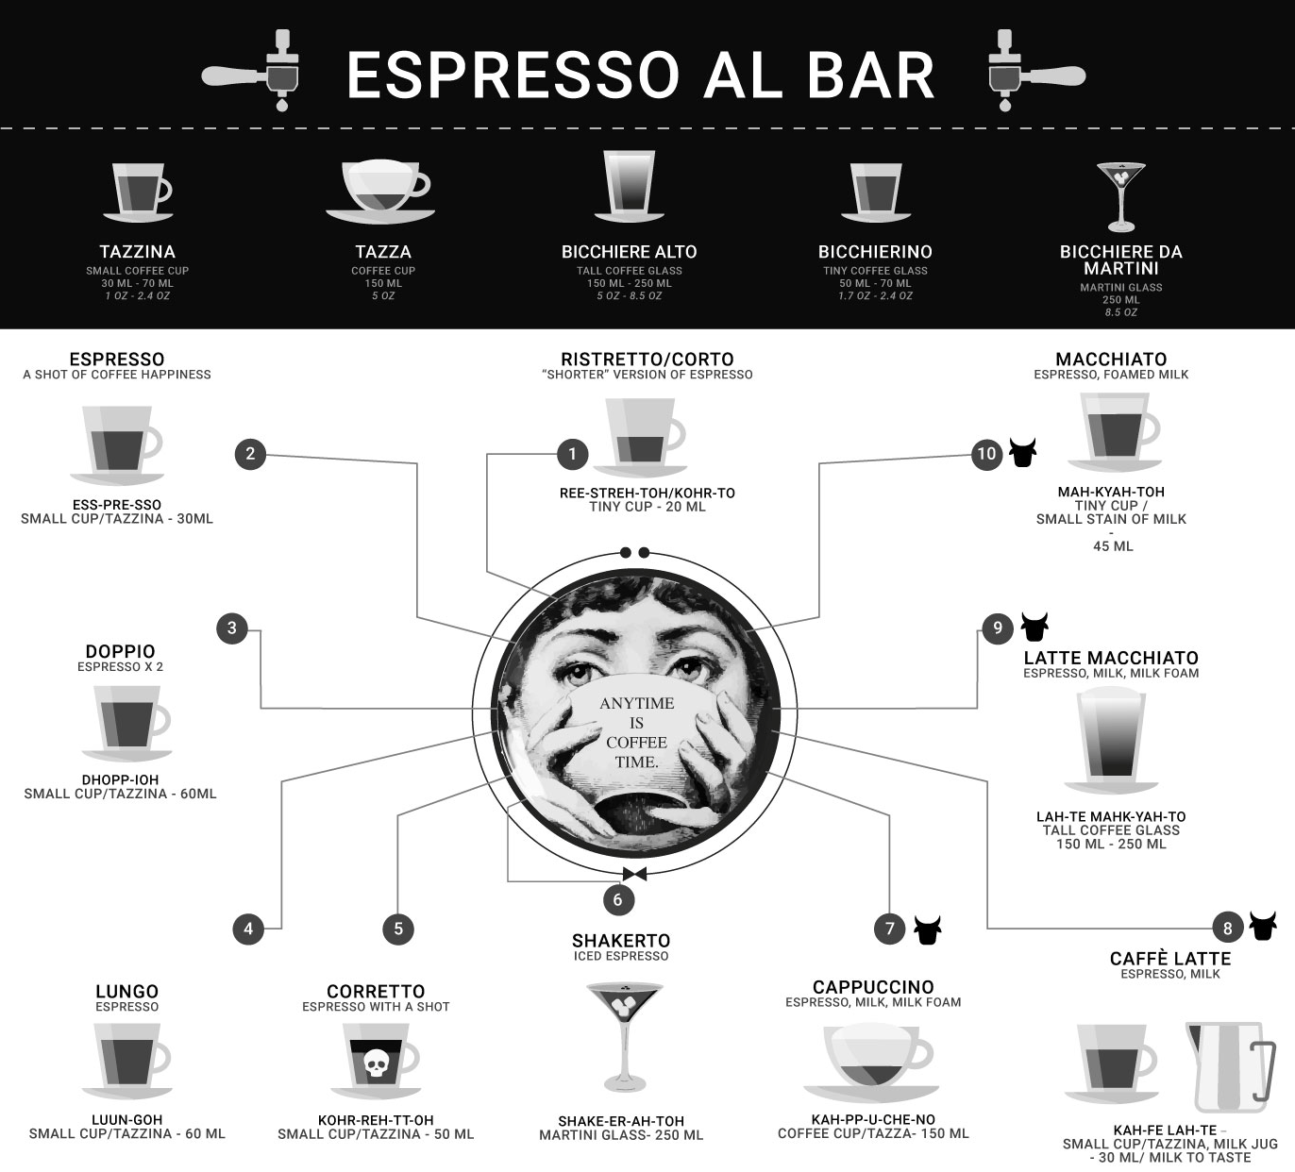 Espresso al bar. Artstudio De Bettin